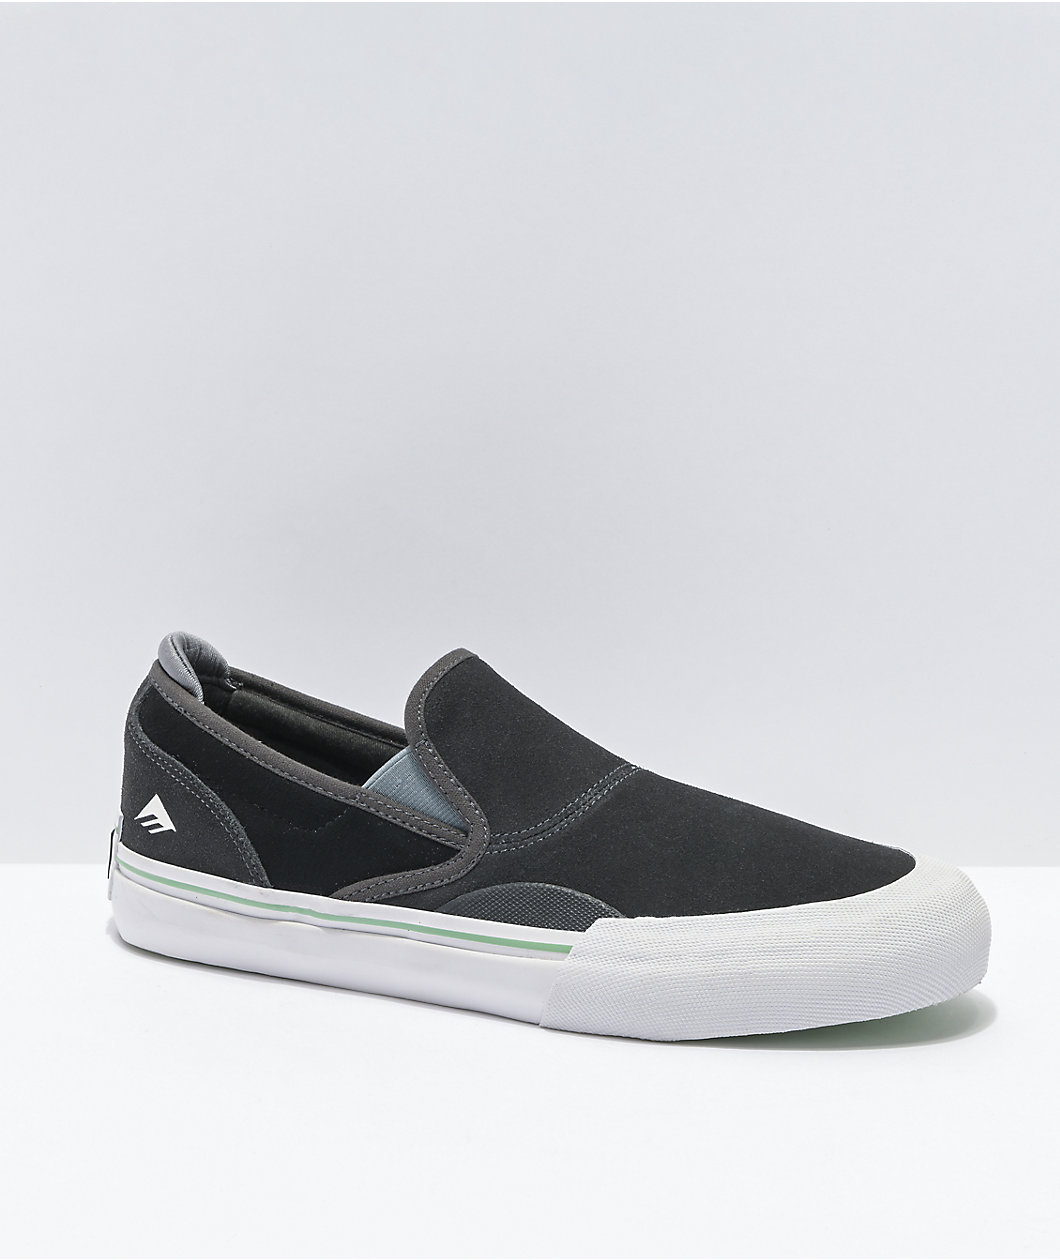 Emerica-Wino-G6-Dark-Grey-%26-Black-Slip-On-Skate-Shoe-_339670-front-US.jpg